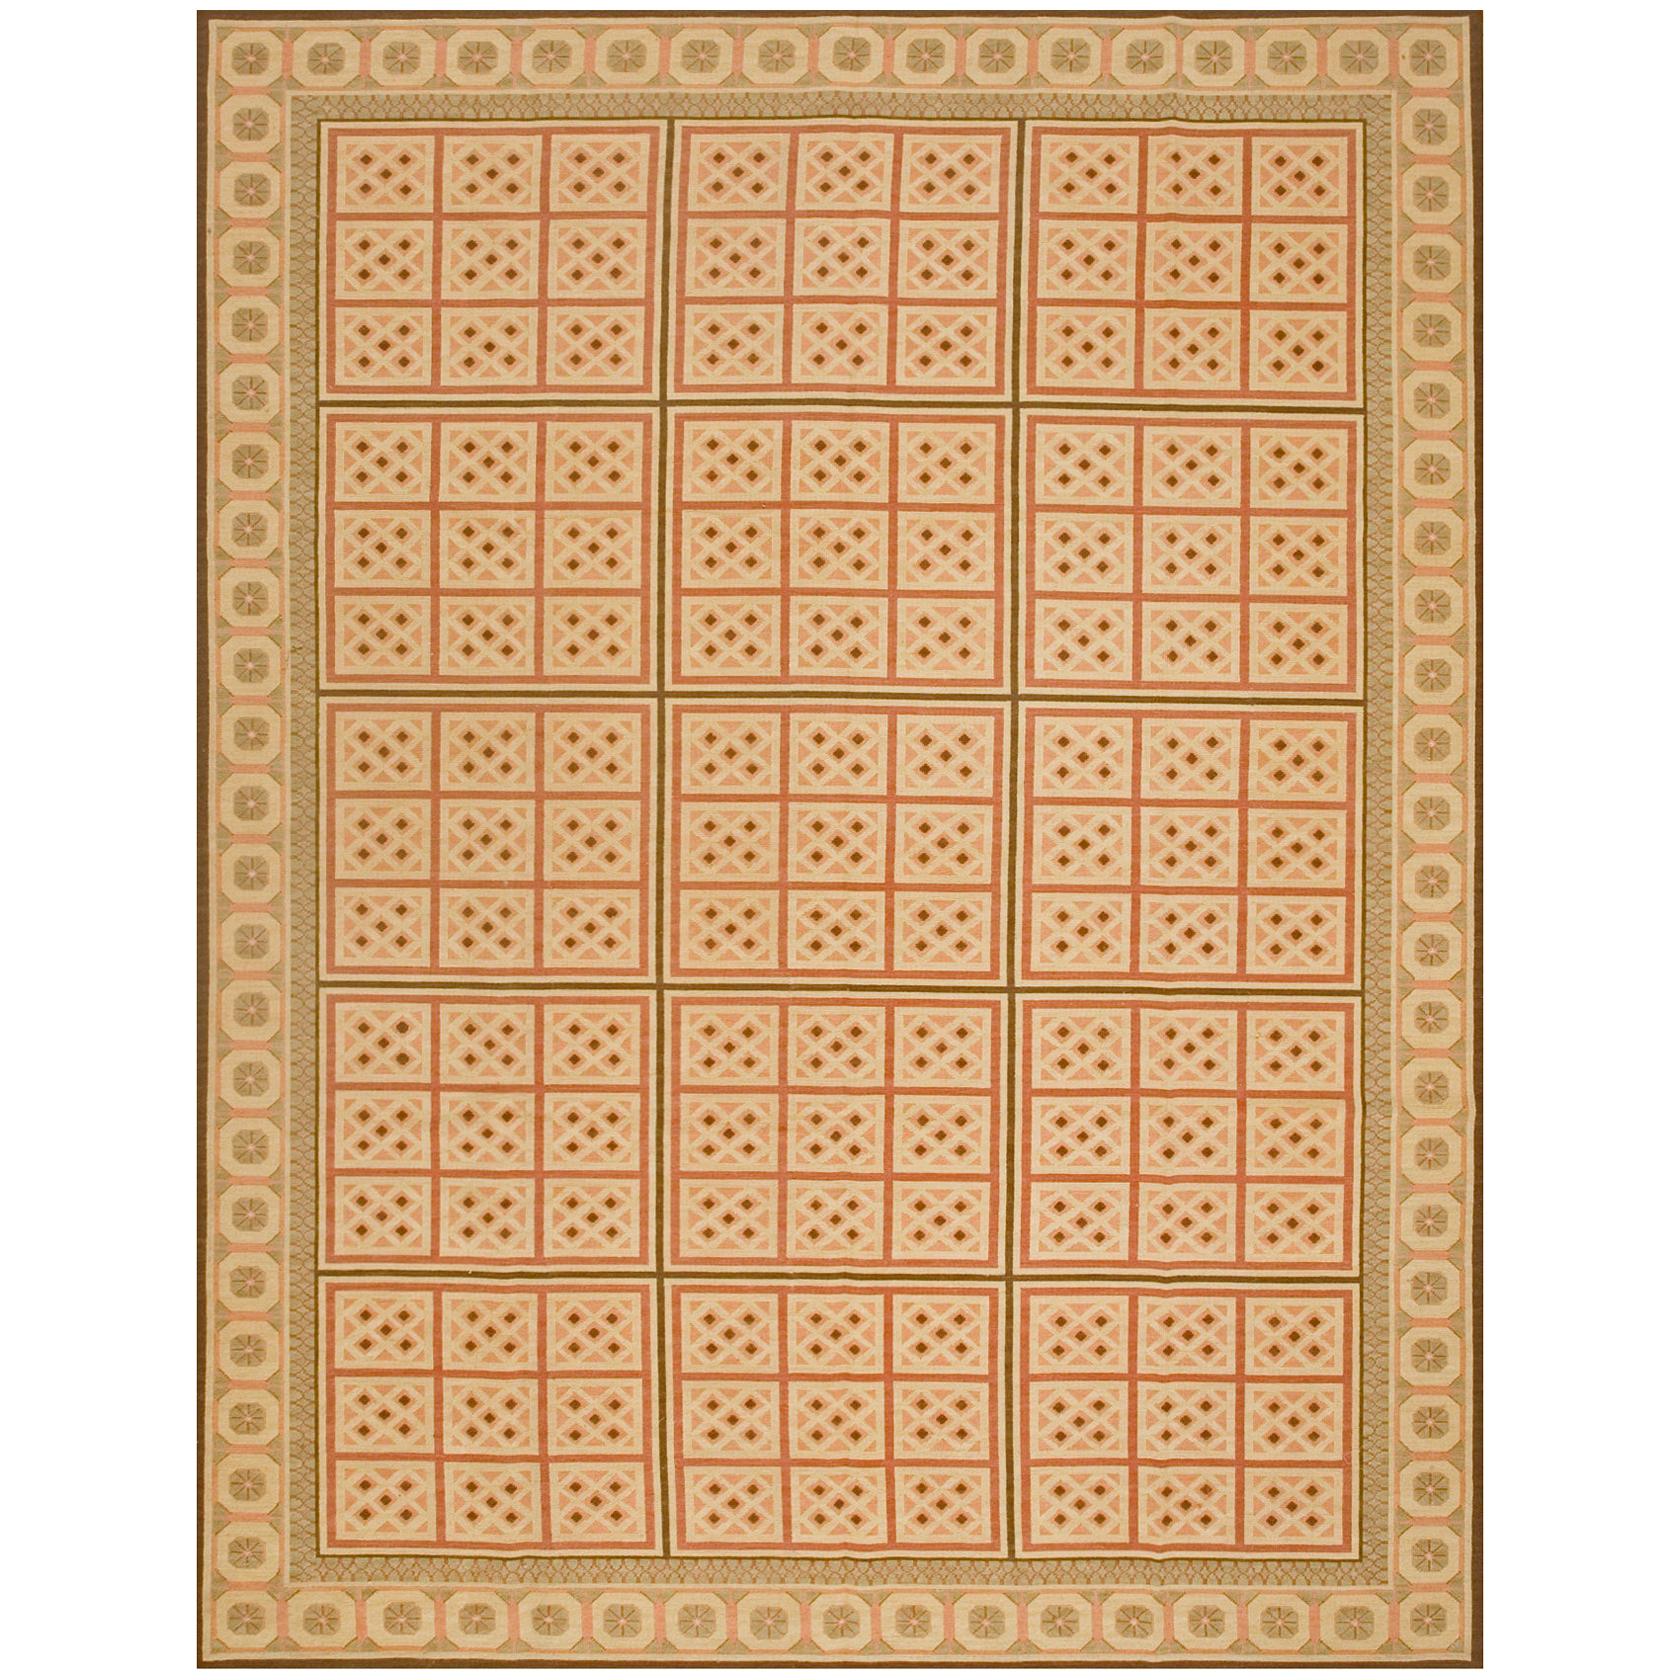 Contemporary Art Deco Style Woolen Needlepoint Carpet ( 6' x 9' - 185 x 275 ) For Sale